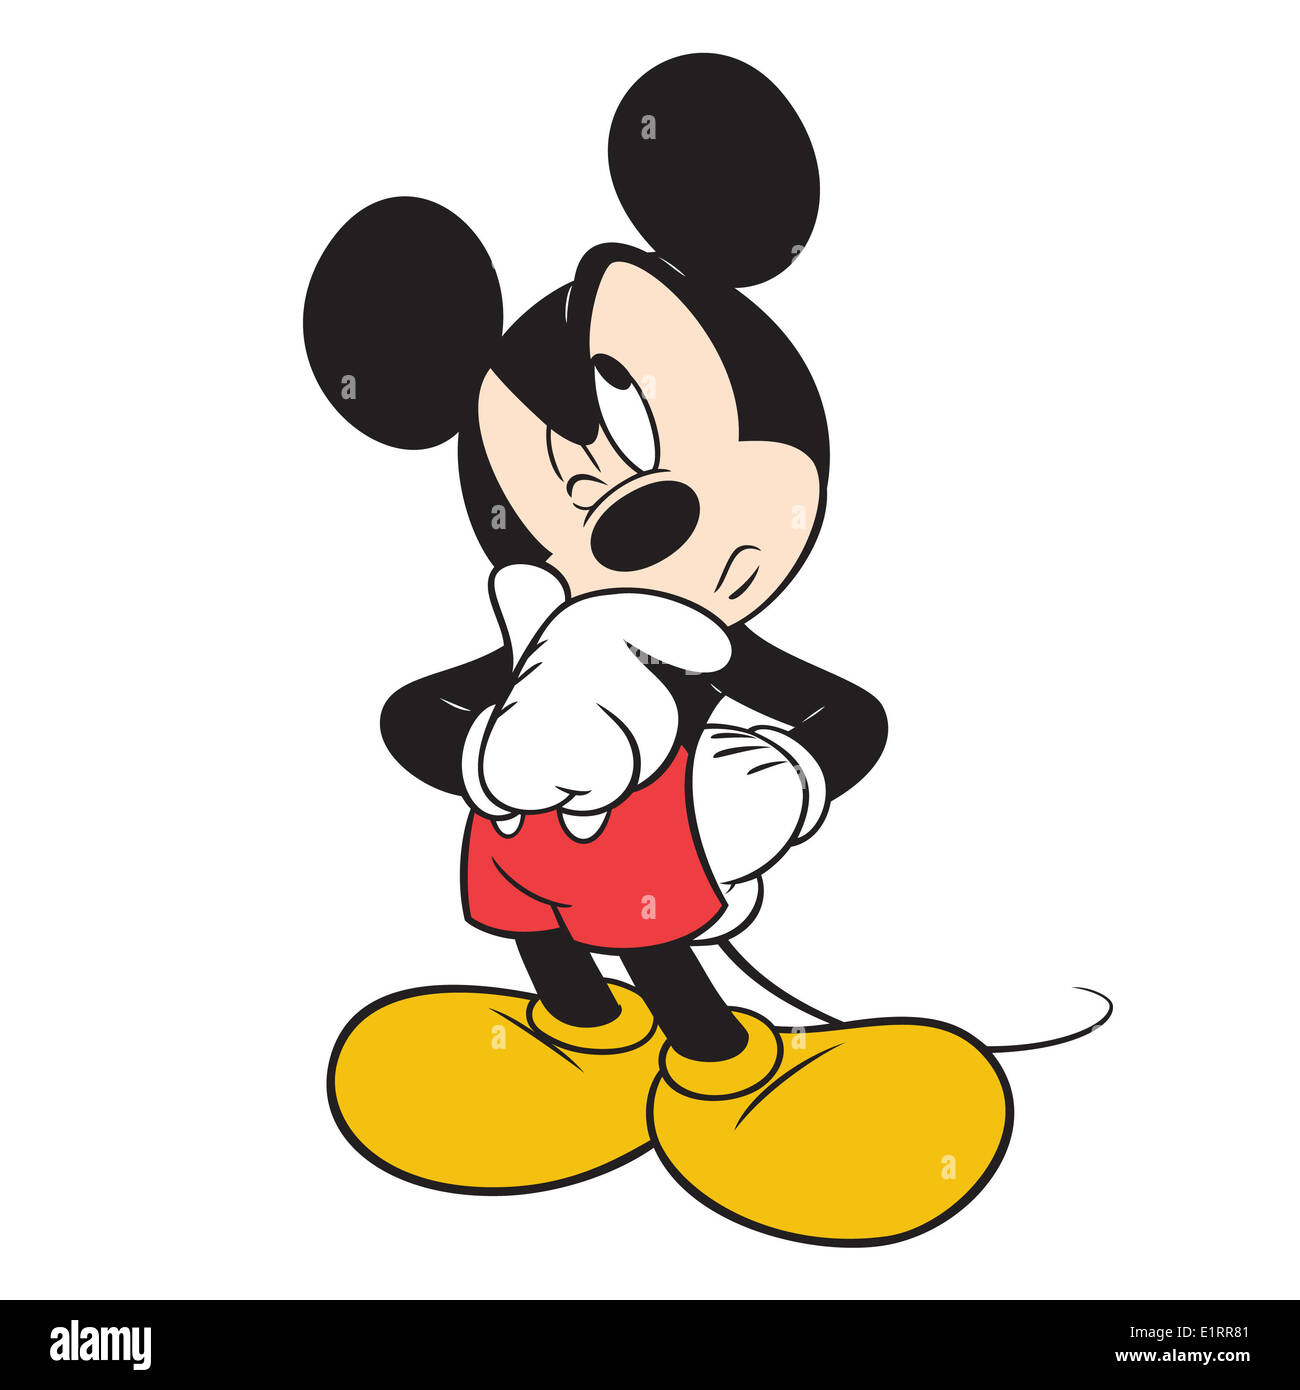 Mickey mouse comic -Fotos und -Bildmaterial in hoher Auflösung – Alamy